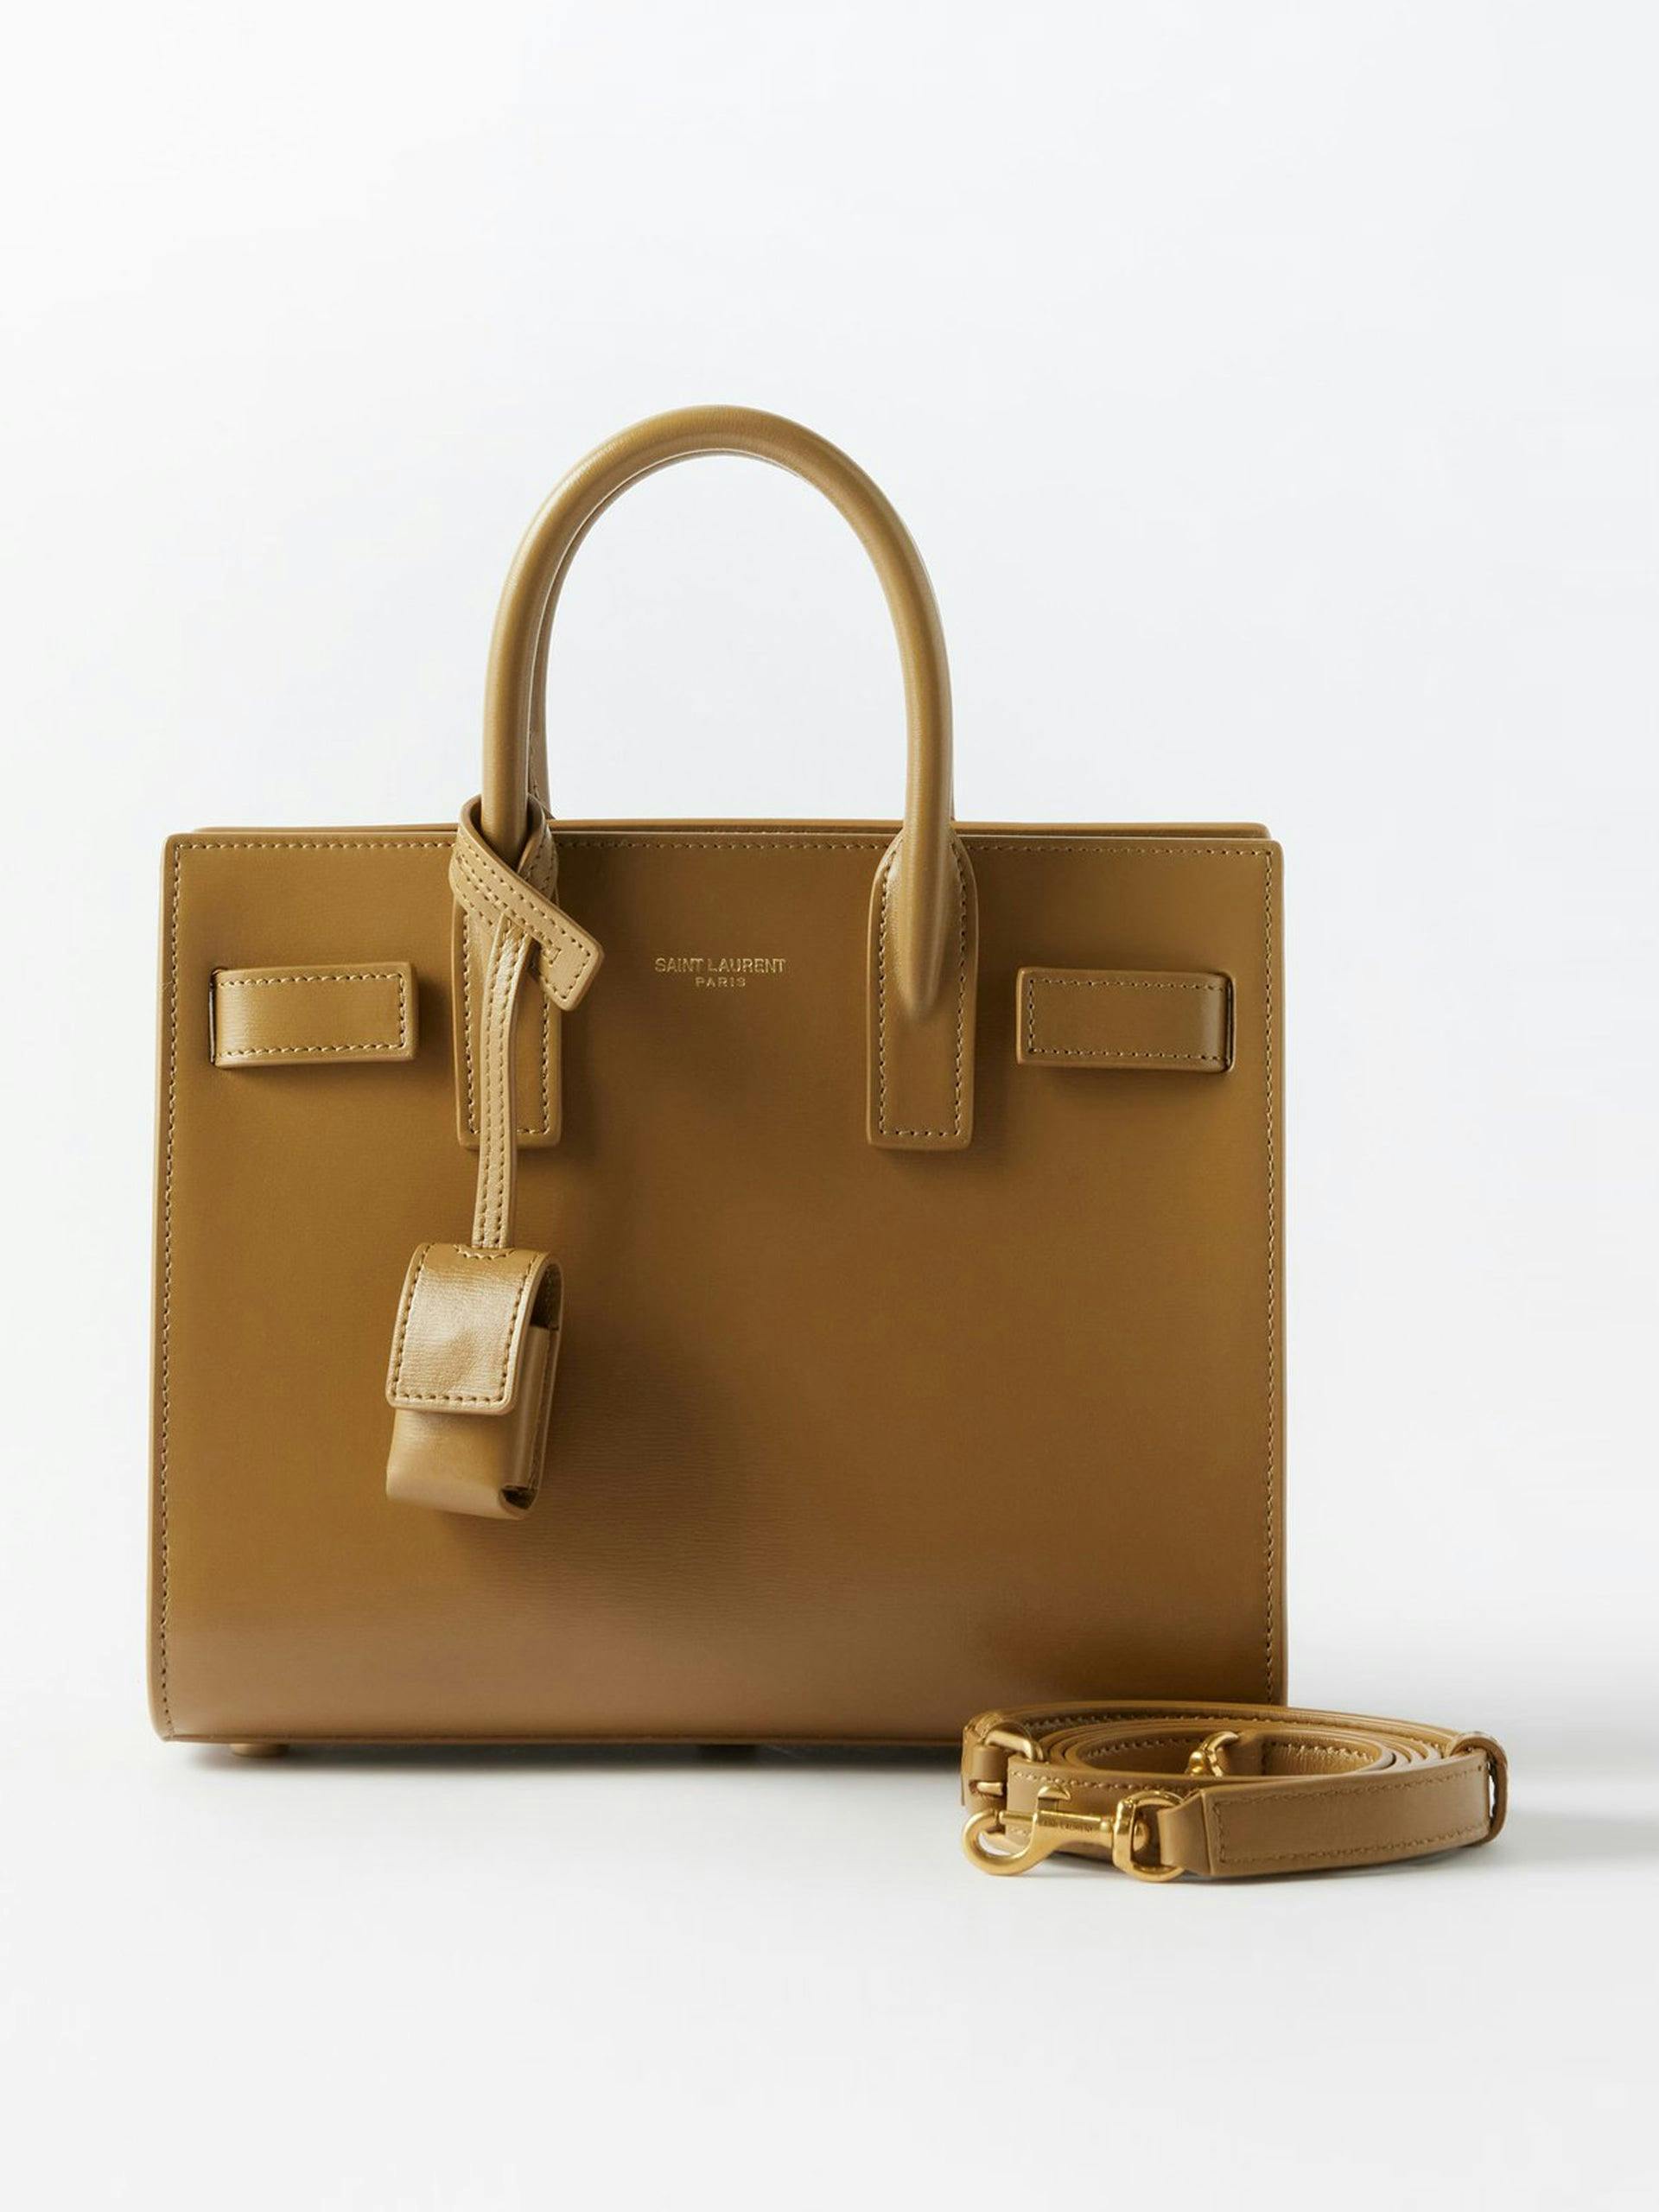 Sac De Jour nano leather handbag in Tan